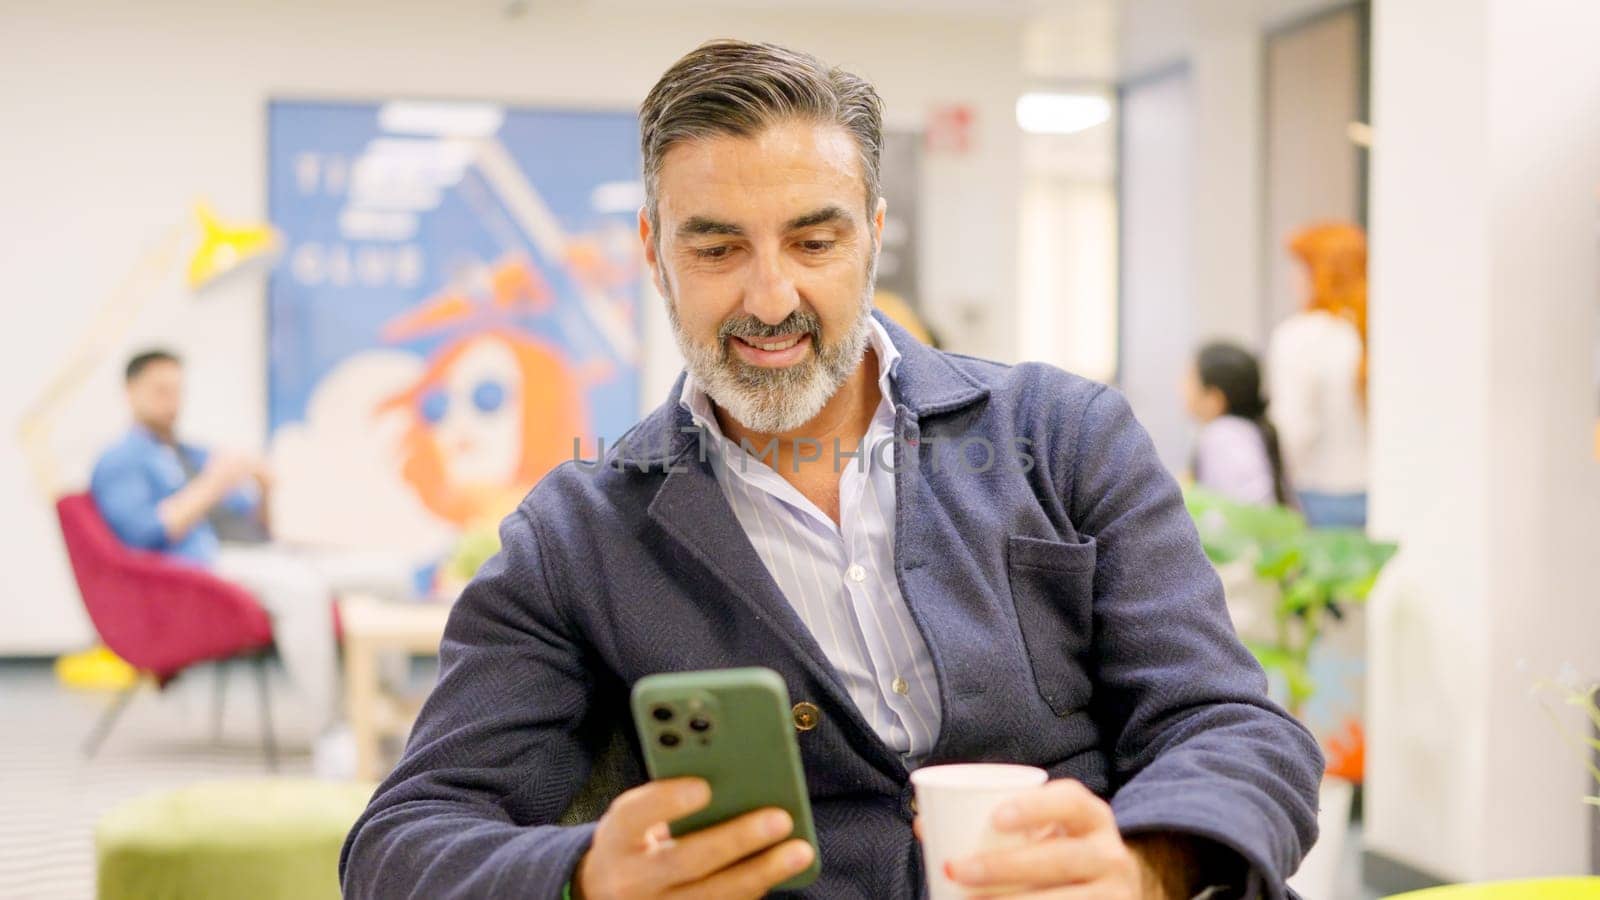 Mature employee using phone in modern coworking by ivanmoreno